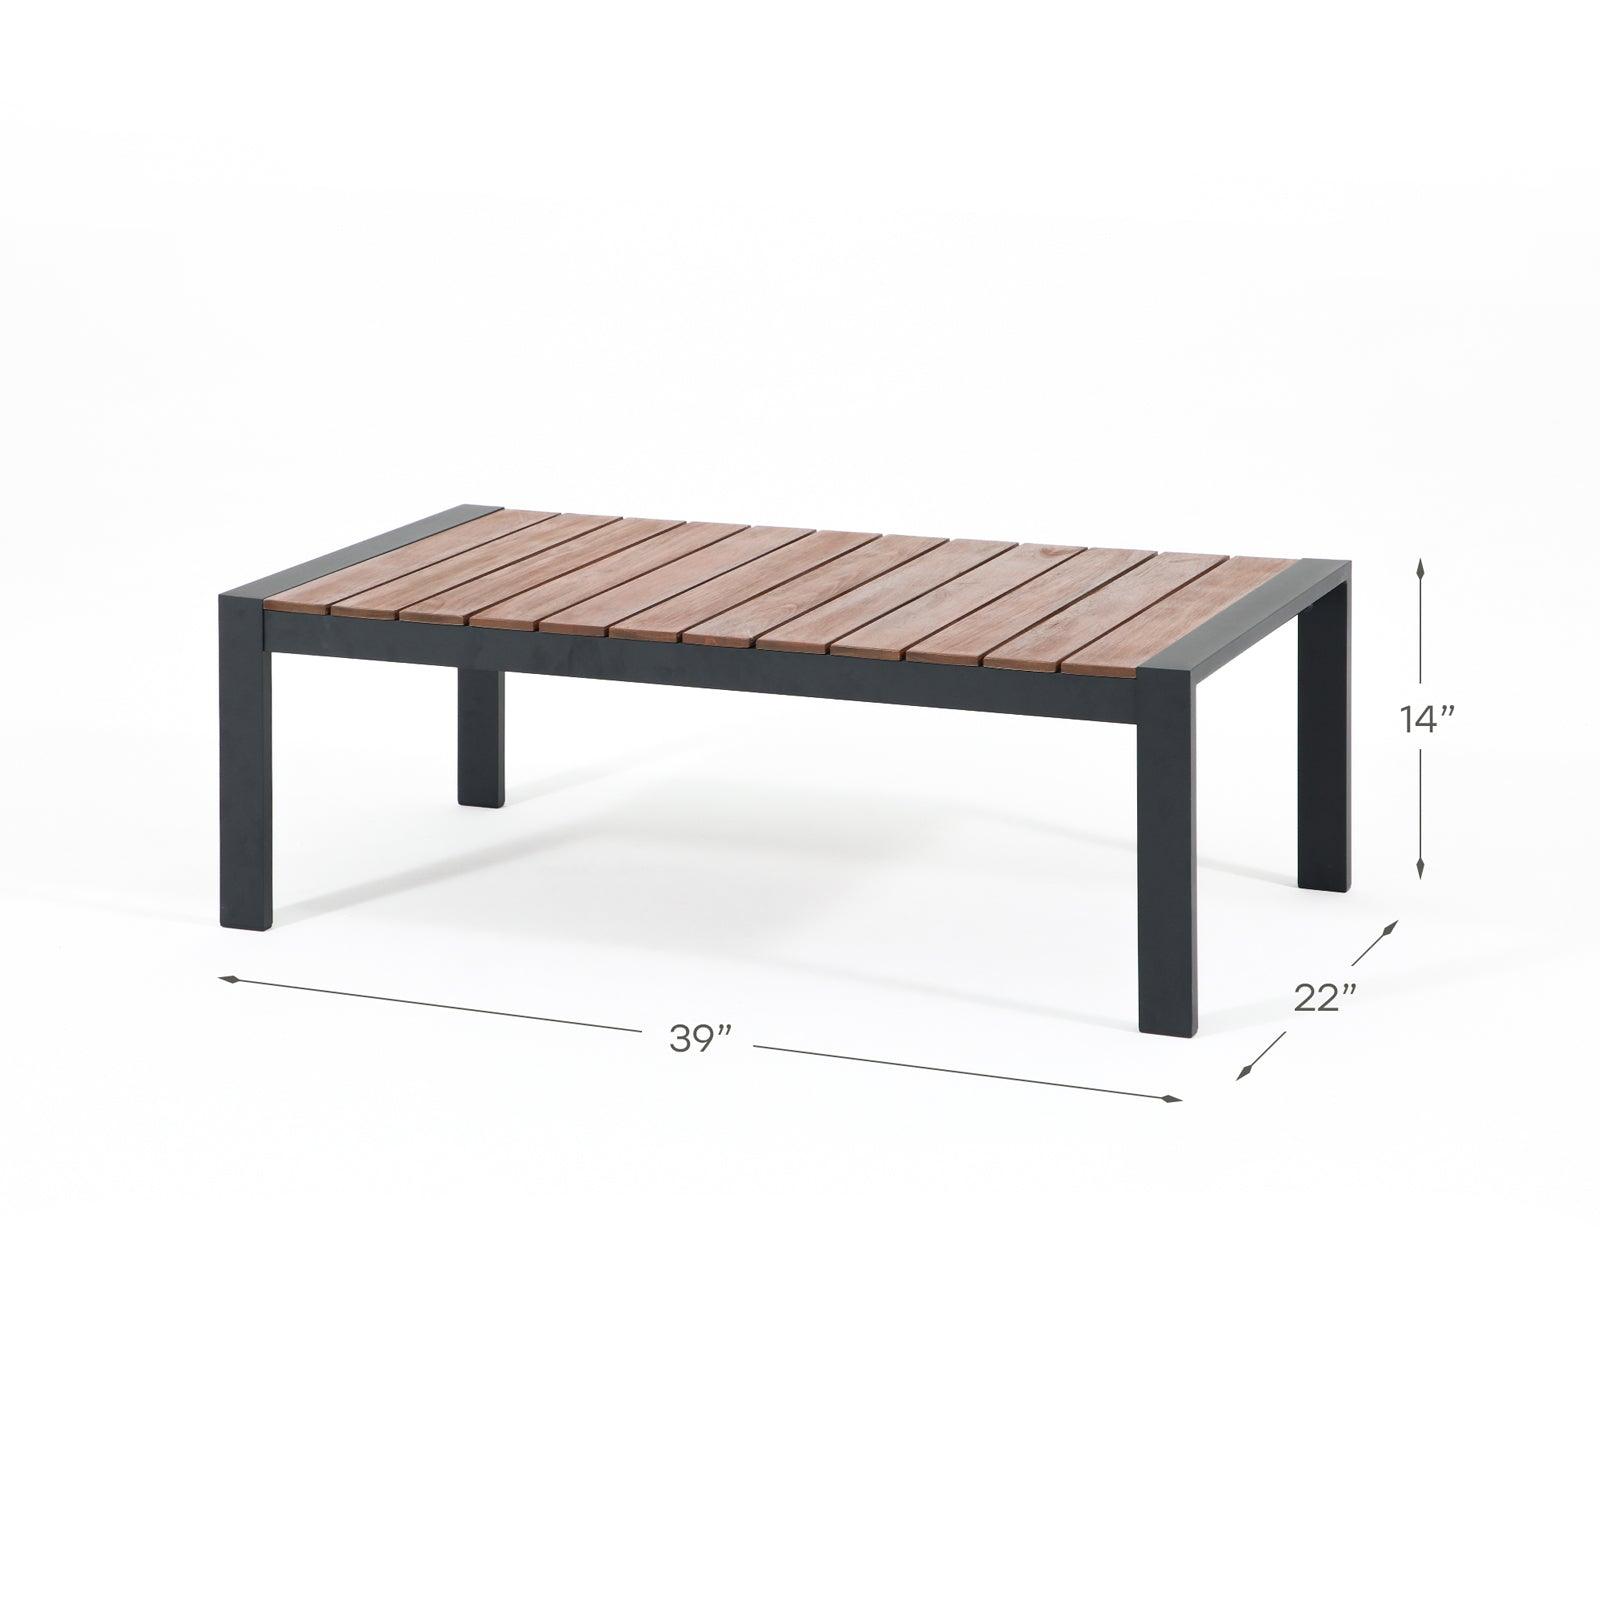 Ronda Grey aluminum outdoor table with wood design, Dimension information- Jardina Furniture